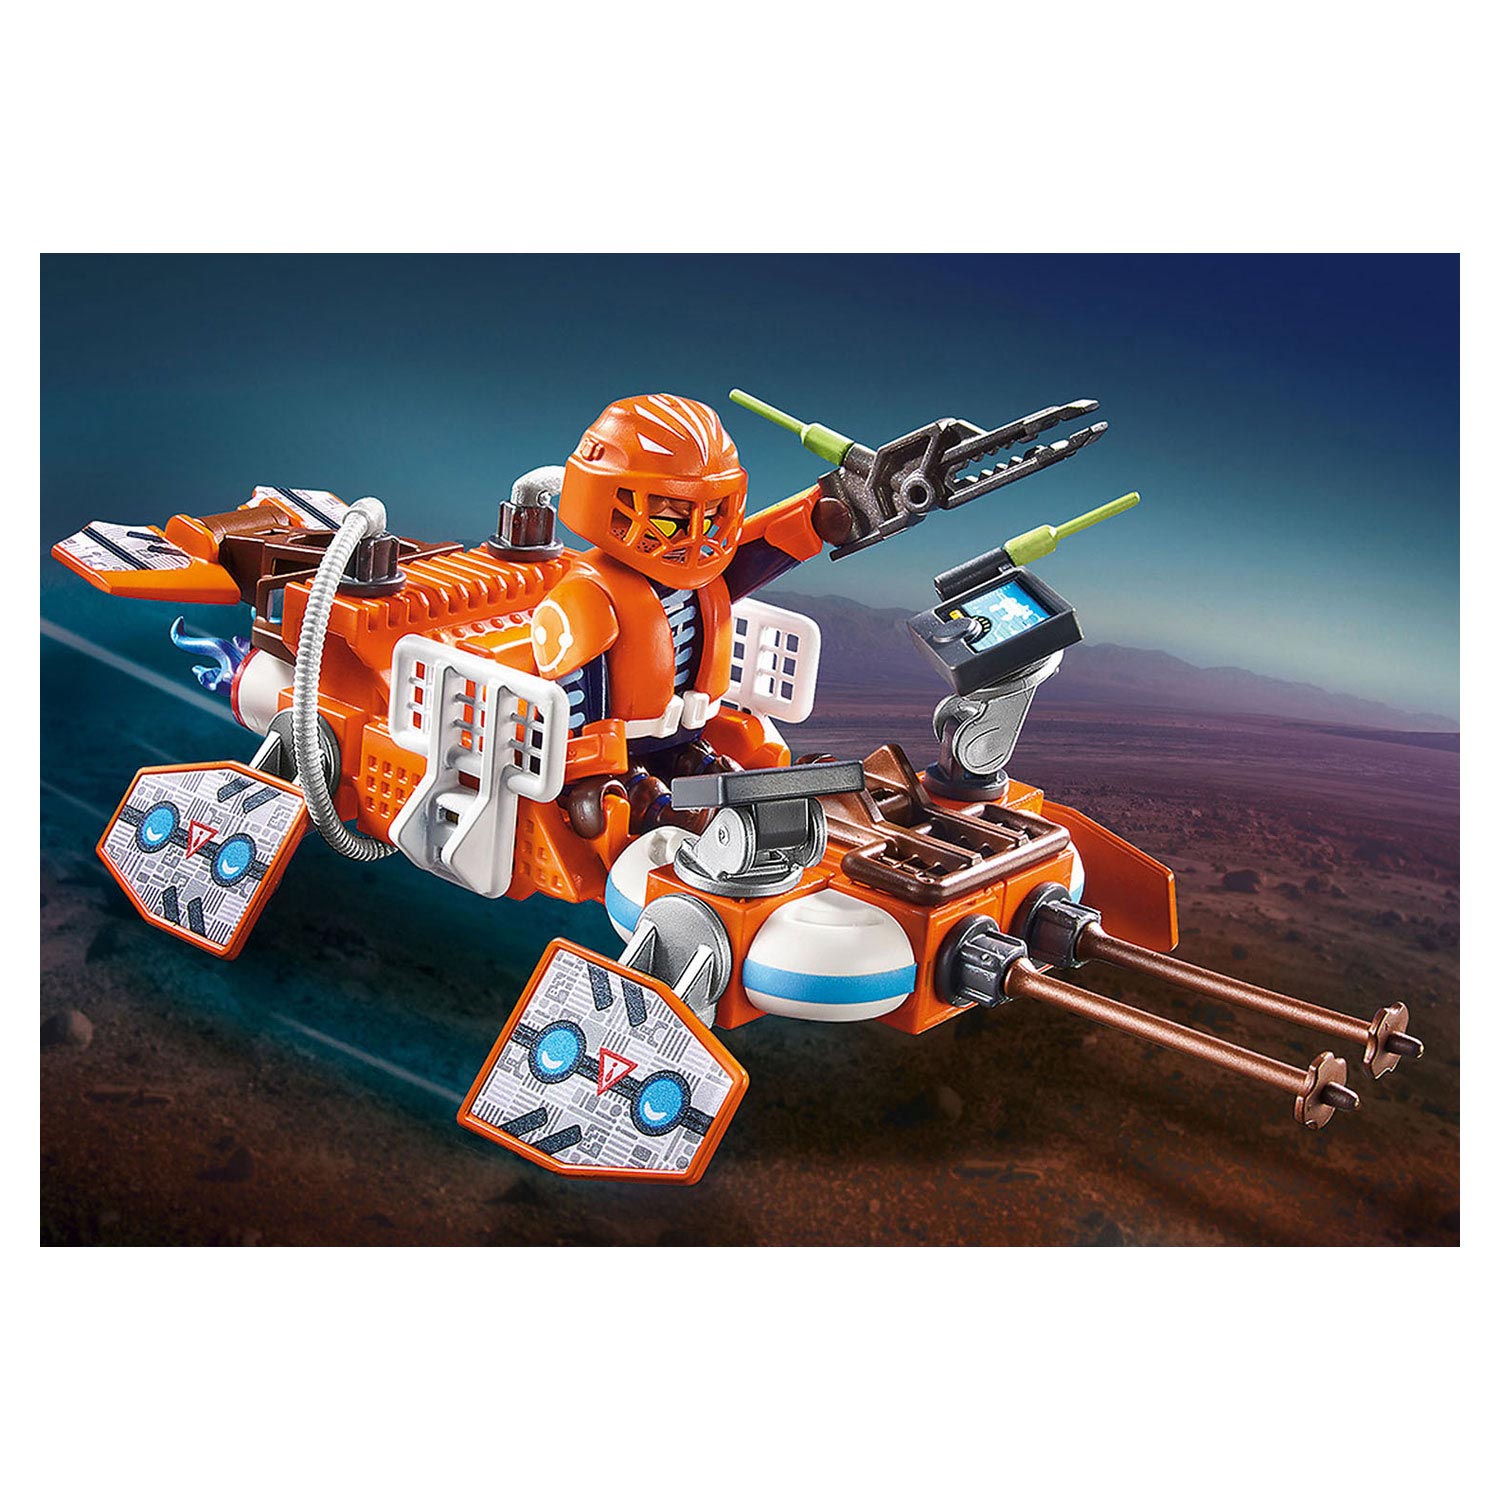 Playmobil City Action Geschenkset Space Speeder - 70673